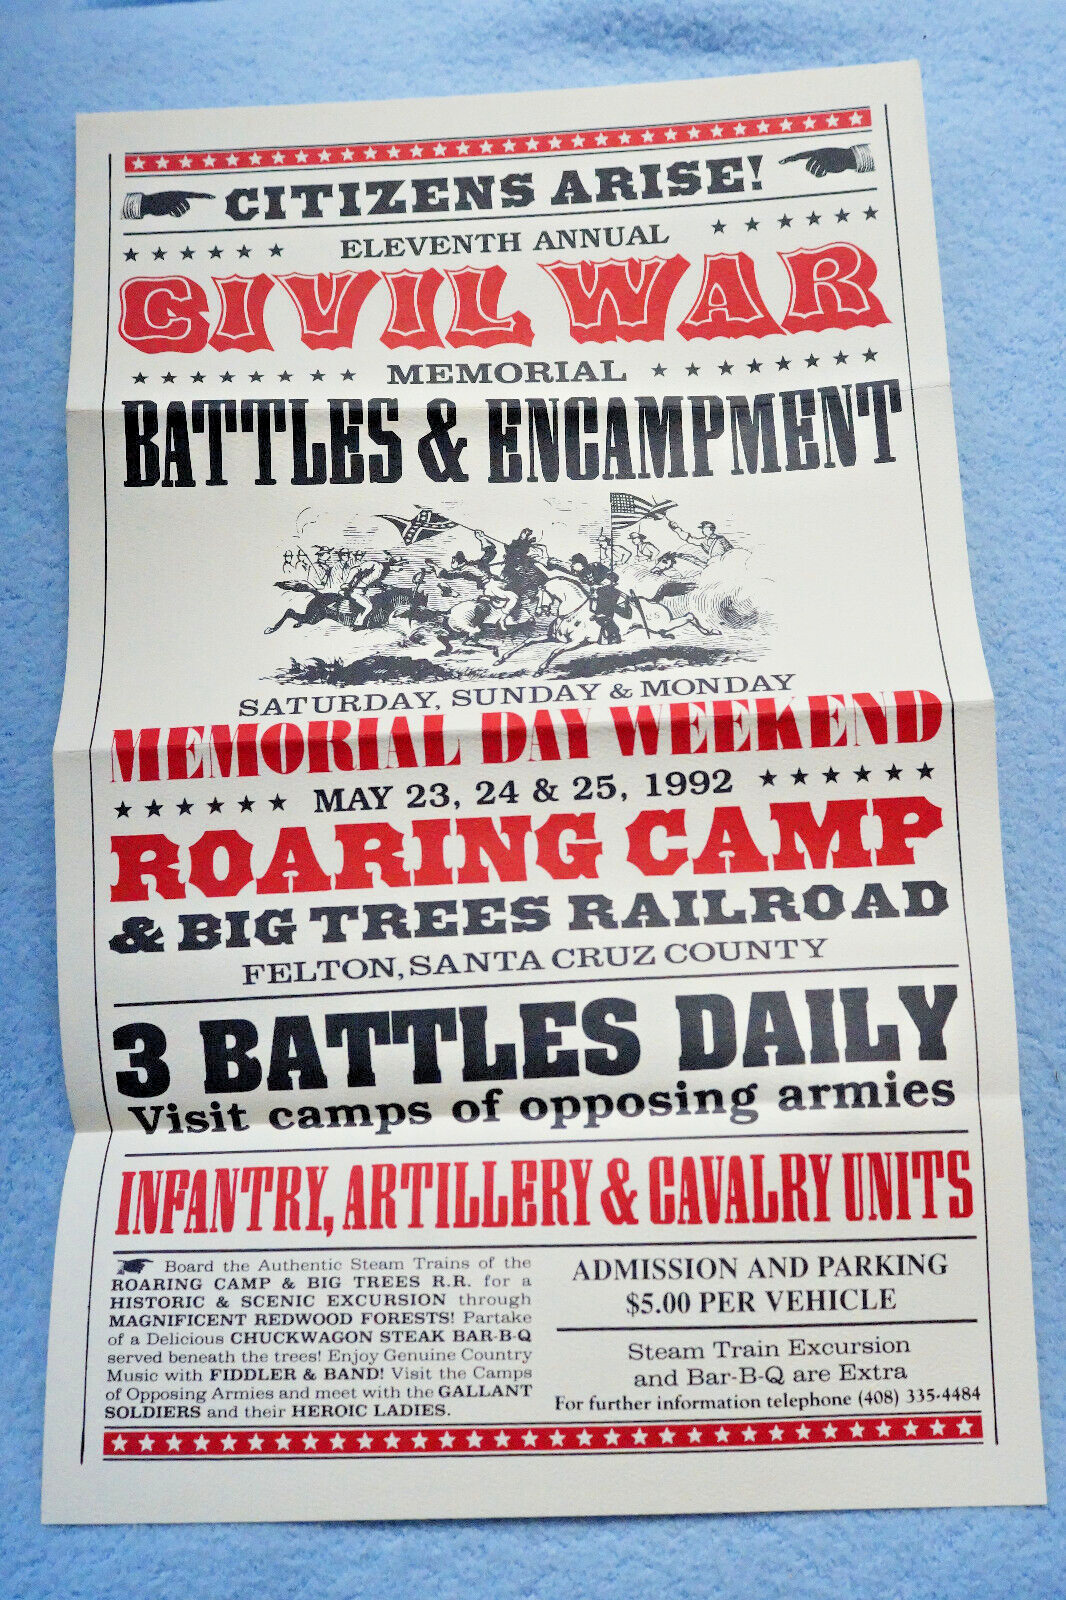 11th Civil War Memorial Battles & Encampment - Roaring Camp & Big Trees Railroad